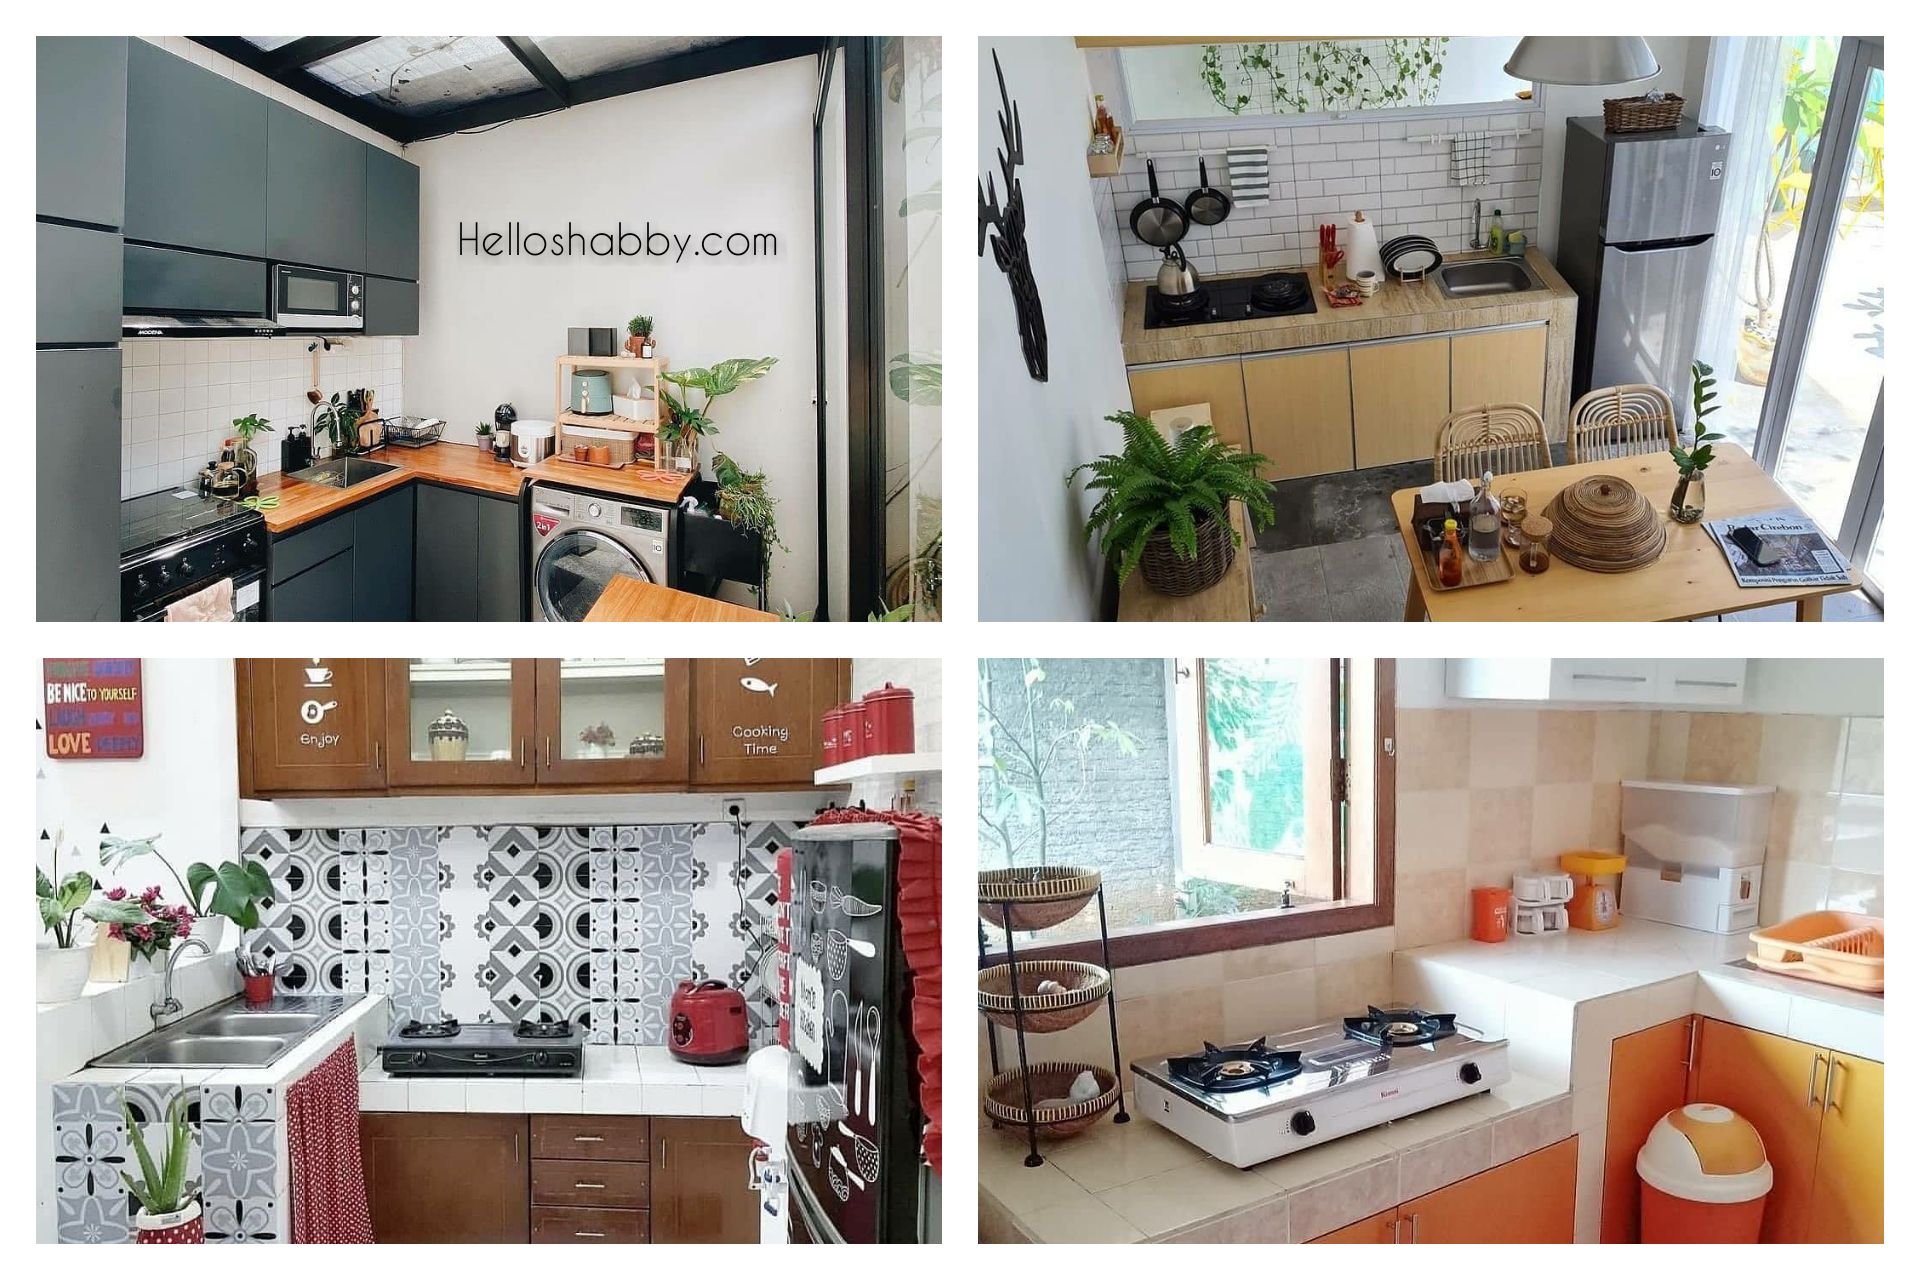 6 Desain Dapur Minimalis Type 36 yang Cantik dan Modern ~ HelloShabby.com :  interior and exterior solutions